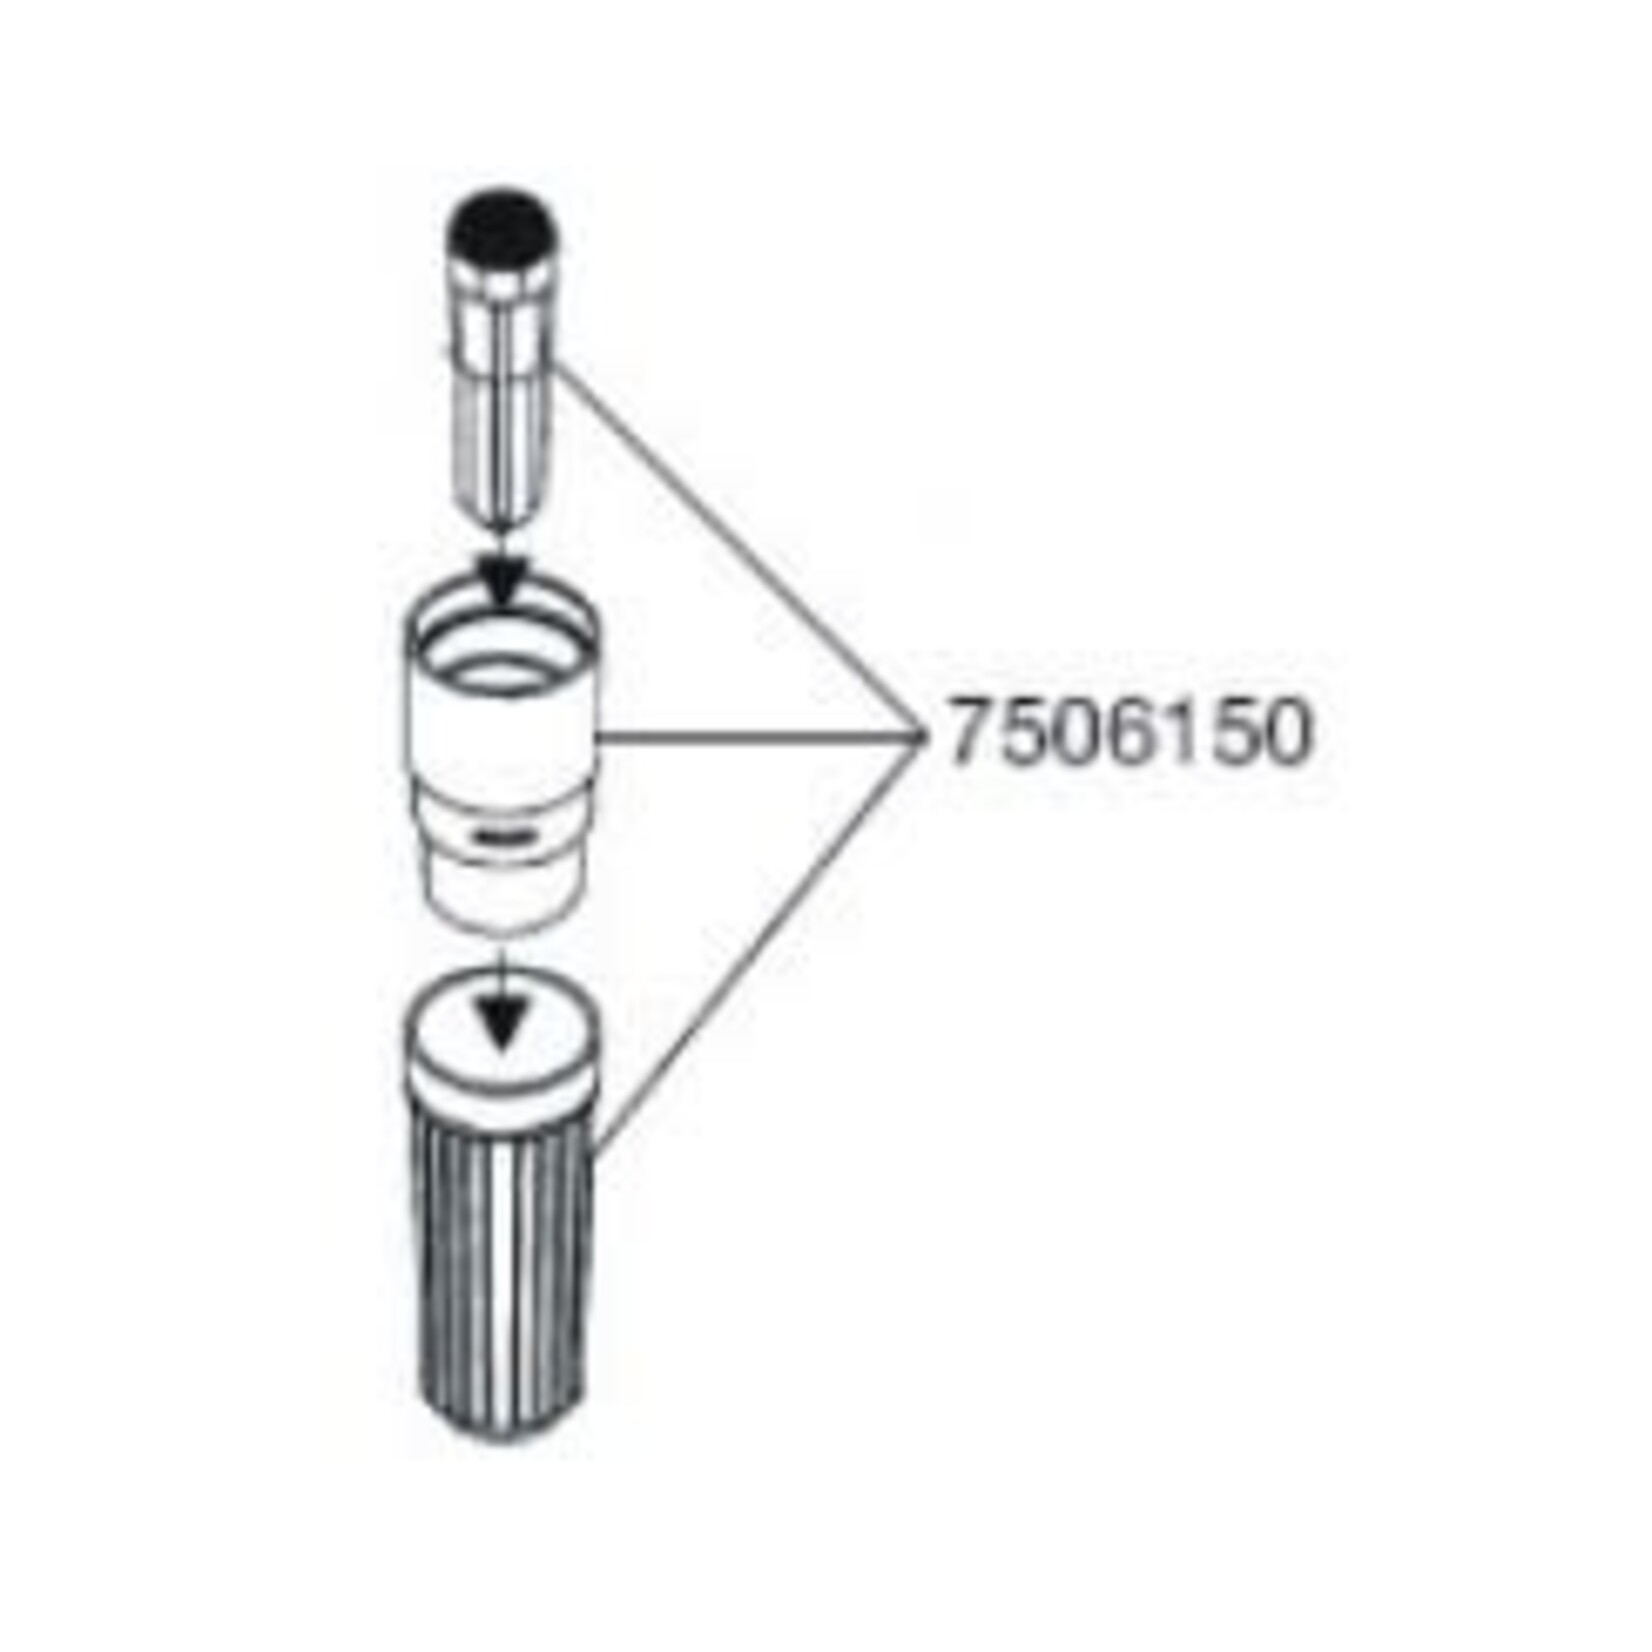 Eheim valve unit for 3535